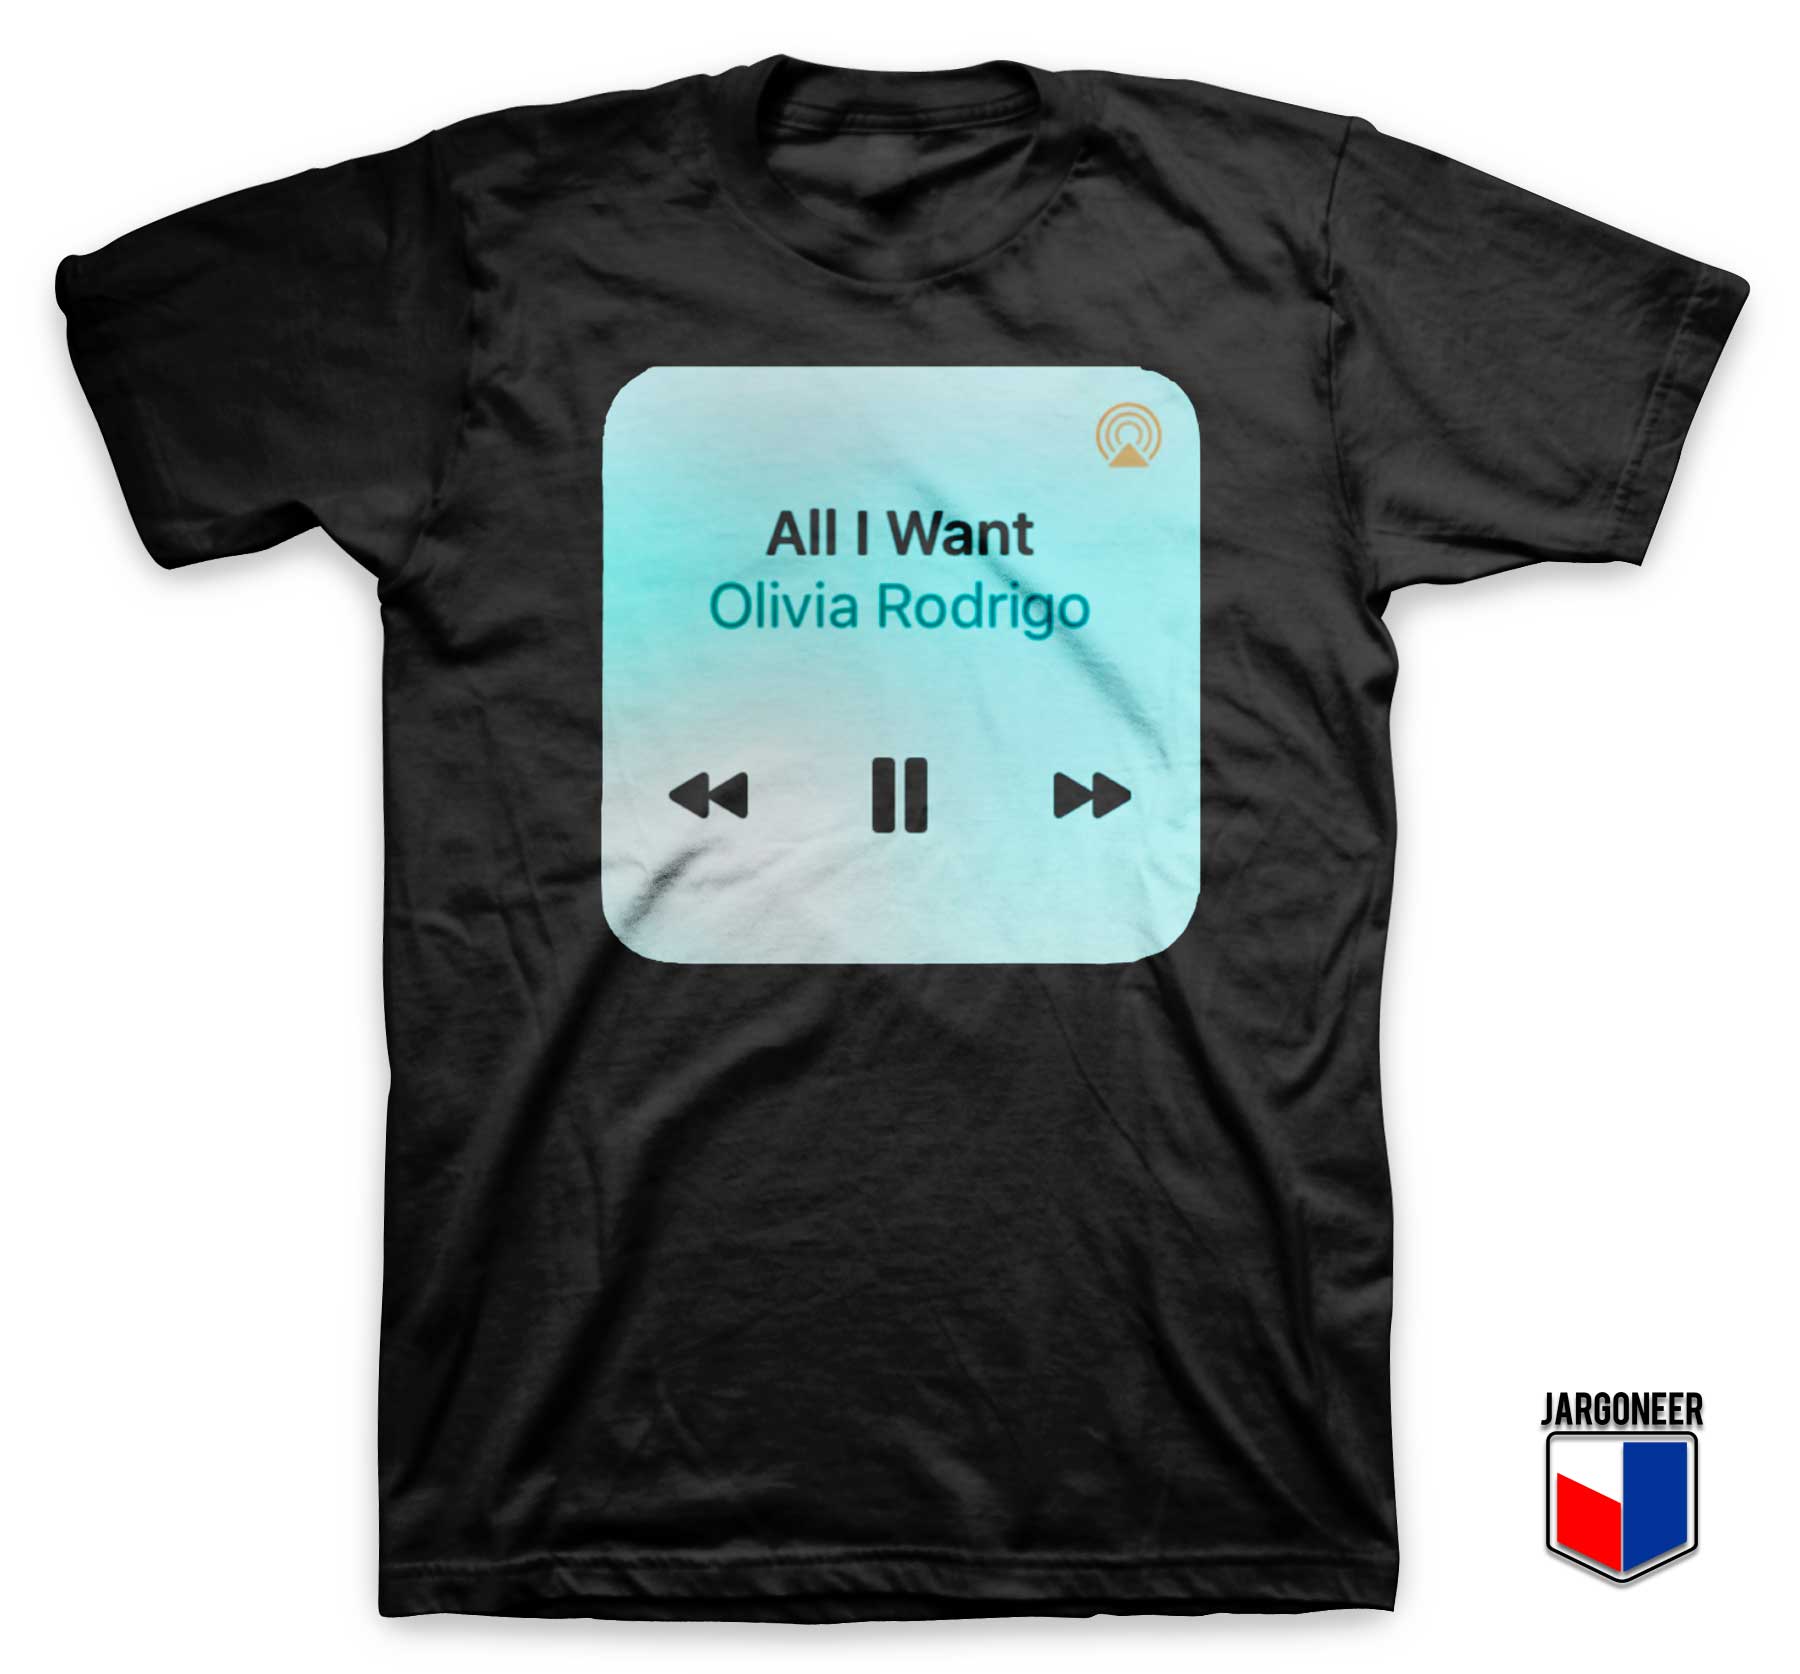 All I Want By Olivia Rodrigo T Shirt - Shop Unique Graphic Cool Shirt Designs